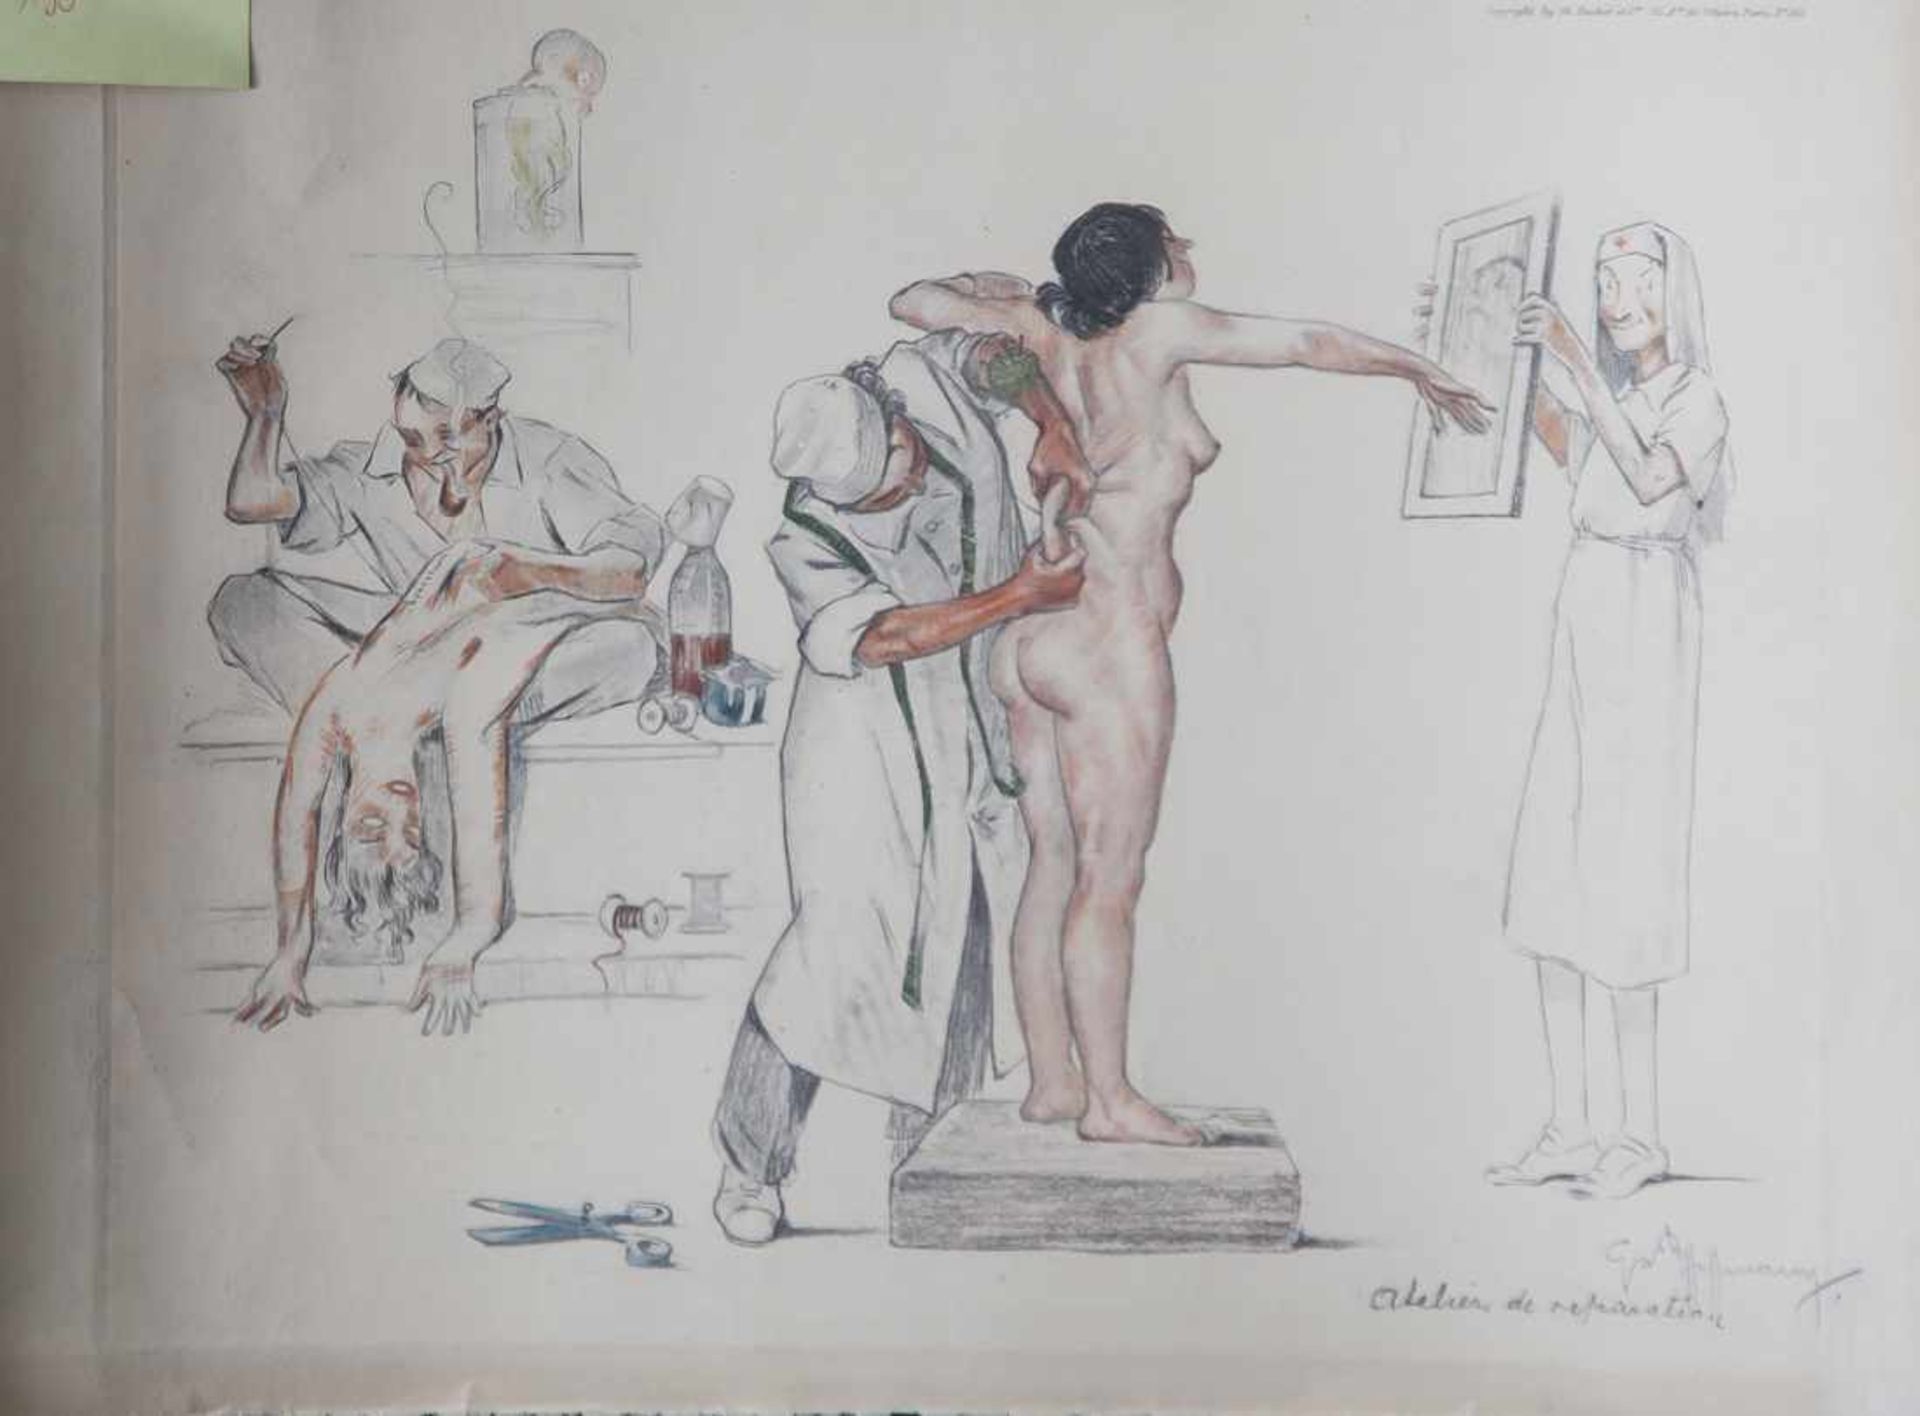 Hoffmann, Gaston (1883-1960), "Atelier de reparation", Farblithographie, re. u. sign. u. bez., re.